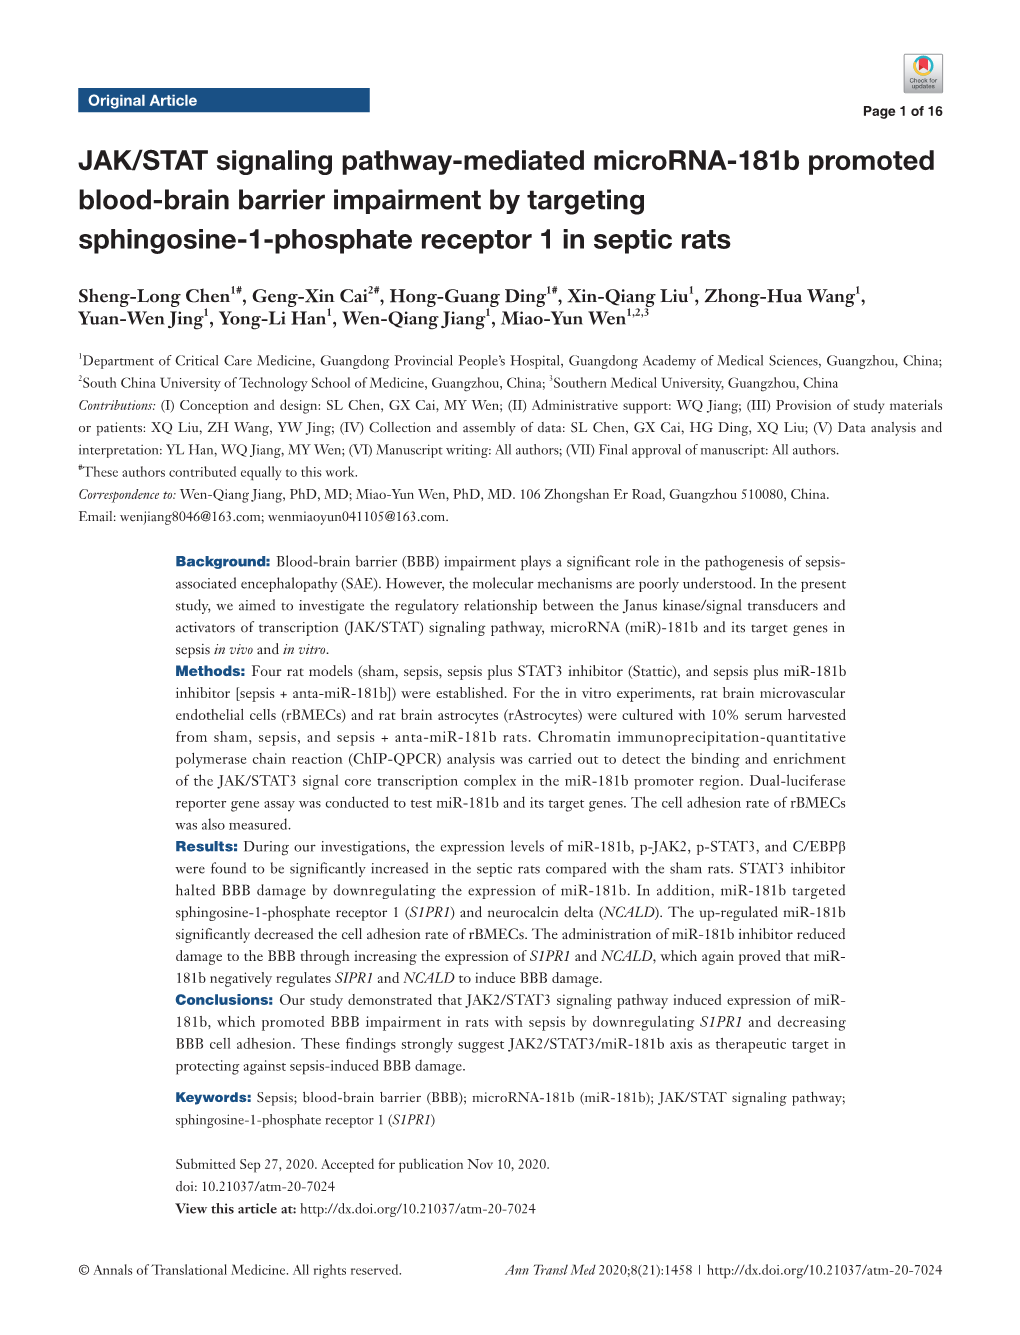 JAK/STAT Signaling Pathway-Mediated Microrna-181B Promoted Blood-Brain Barrier Impairment by Targeting Sphingosine-1-Phosphate Receptor 1 in Septic Rats